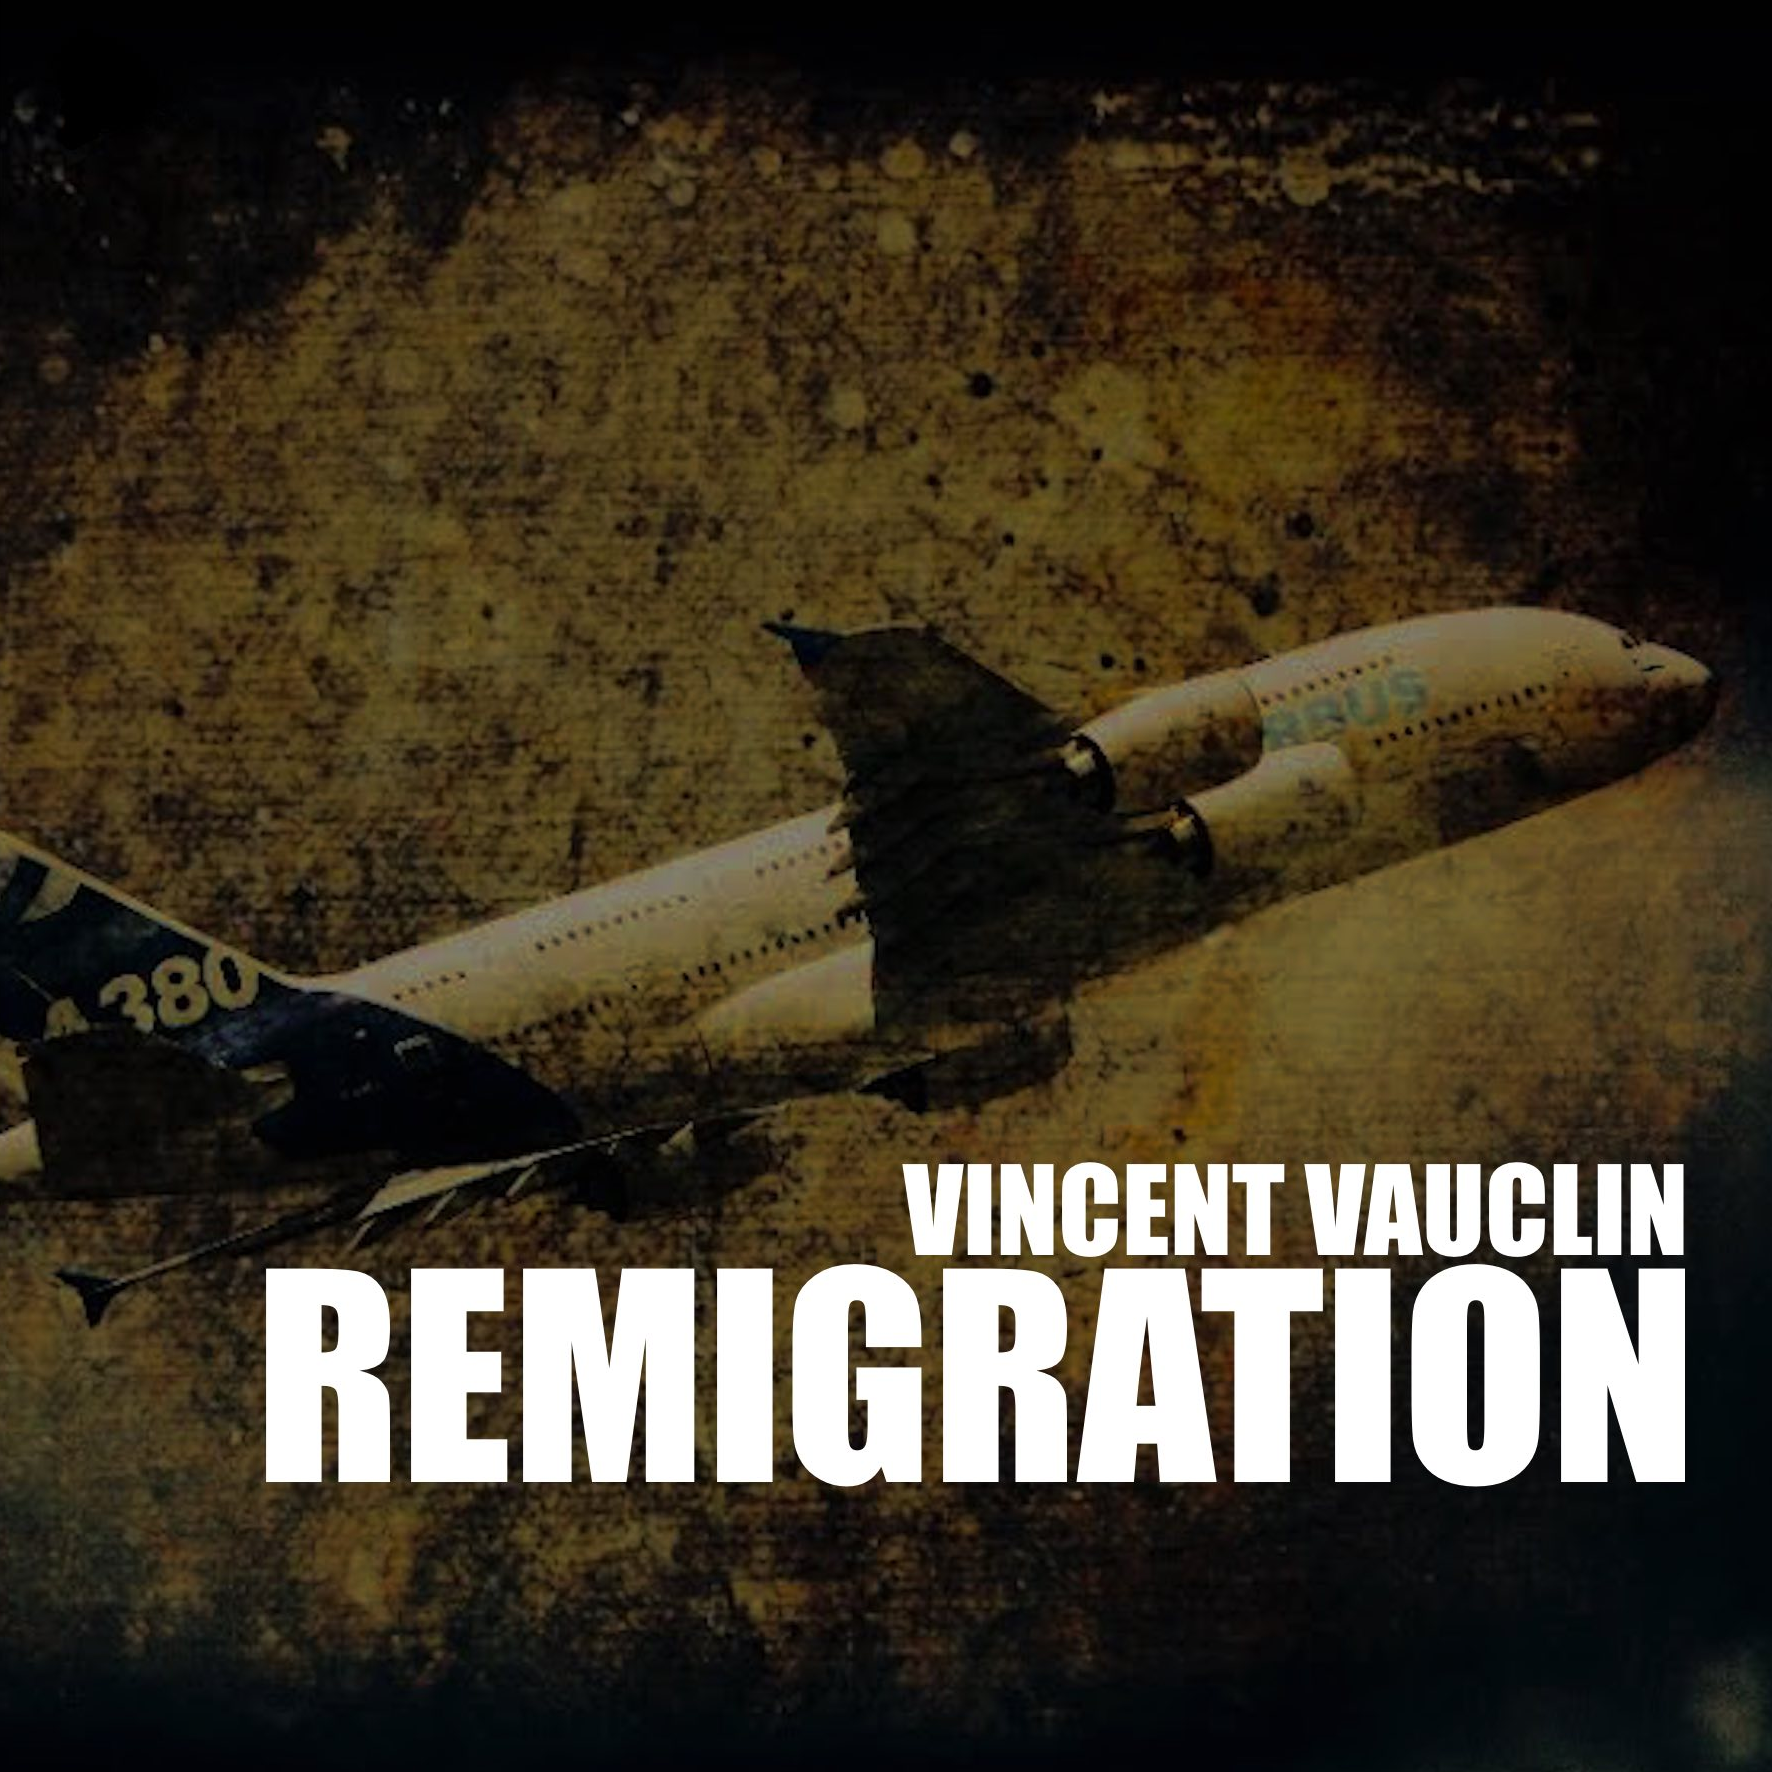 Remigration